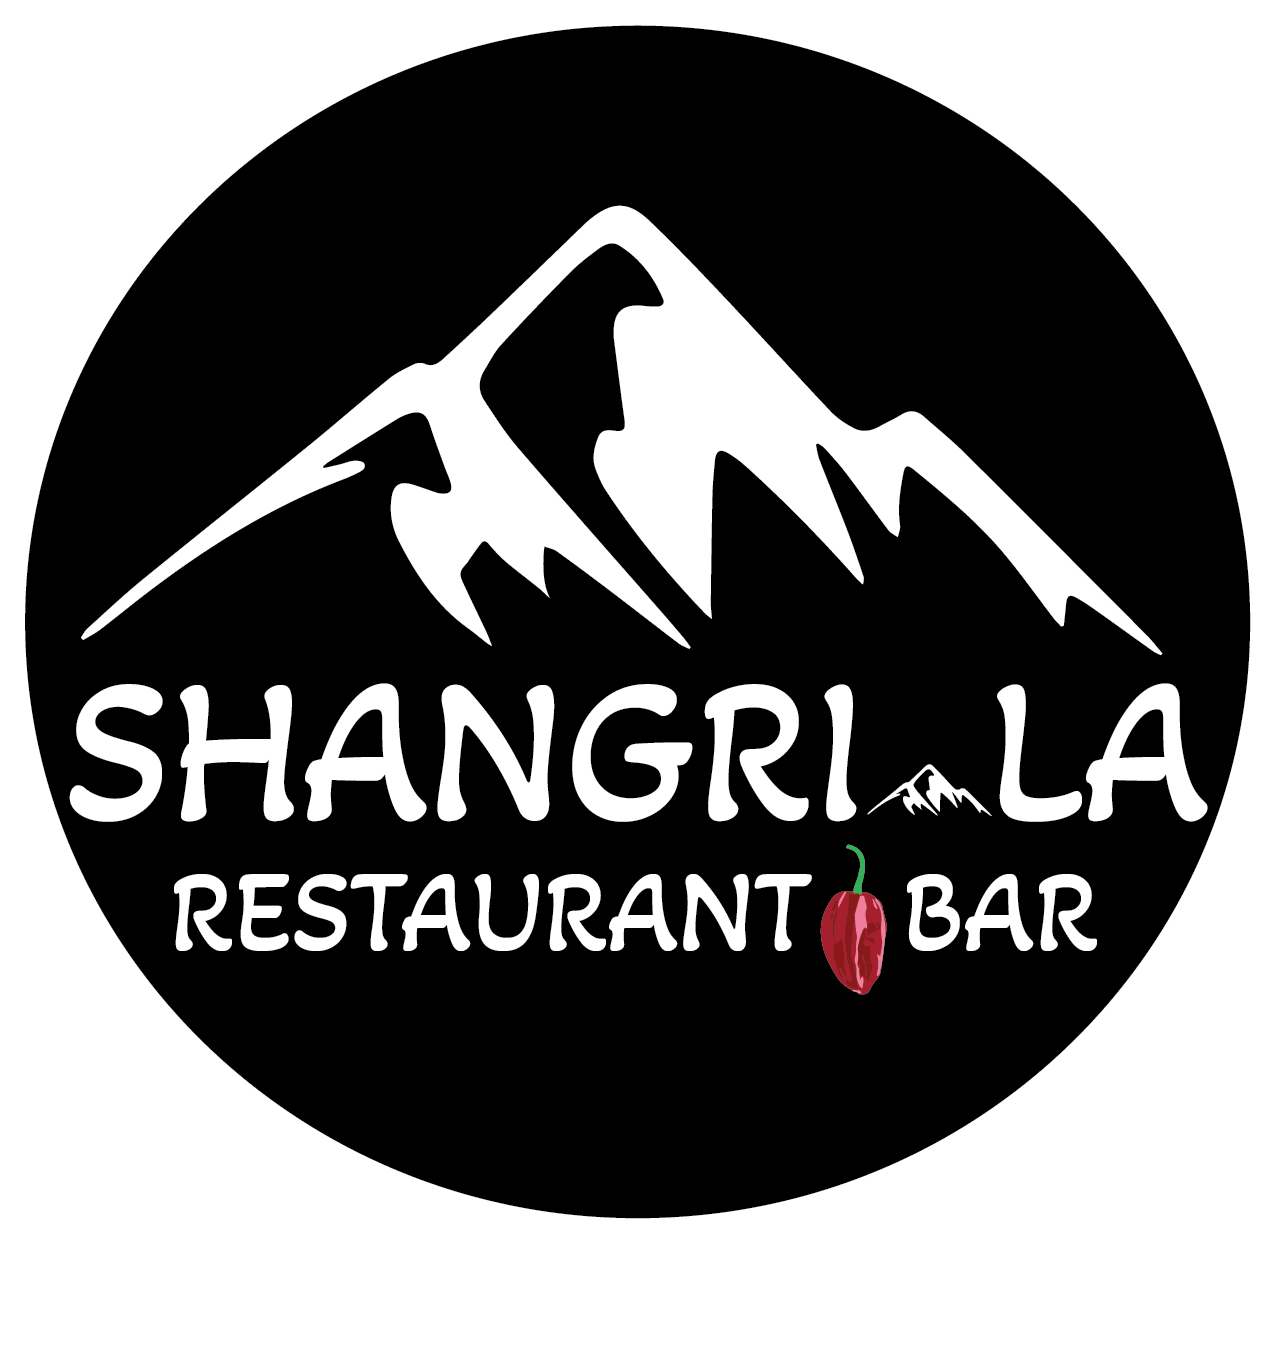 Shangri-La Restaurant and Bar 